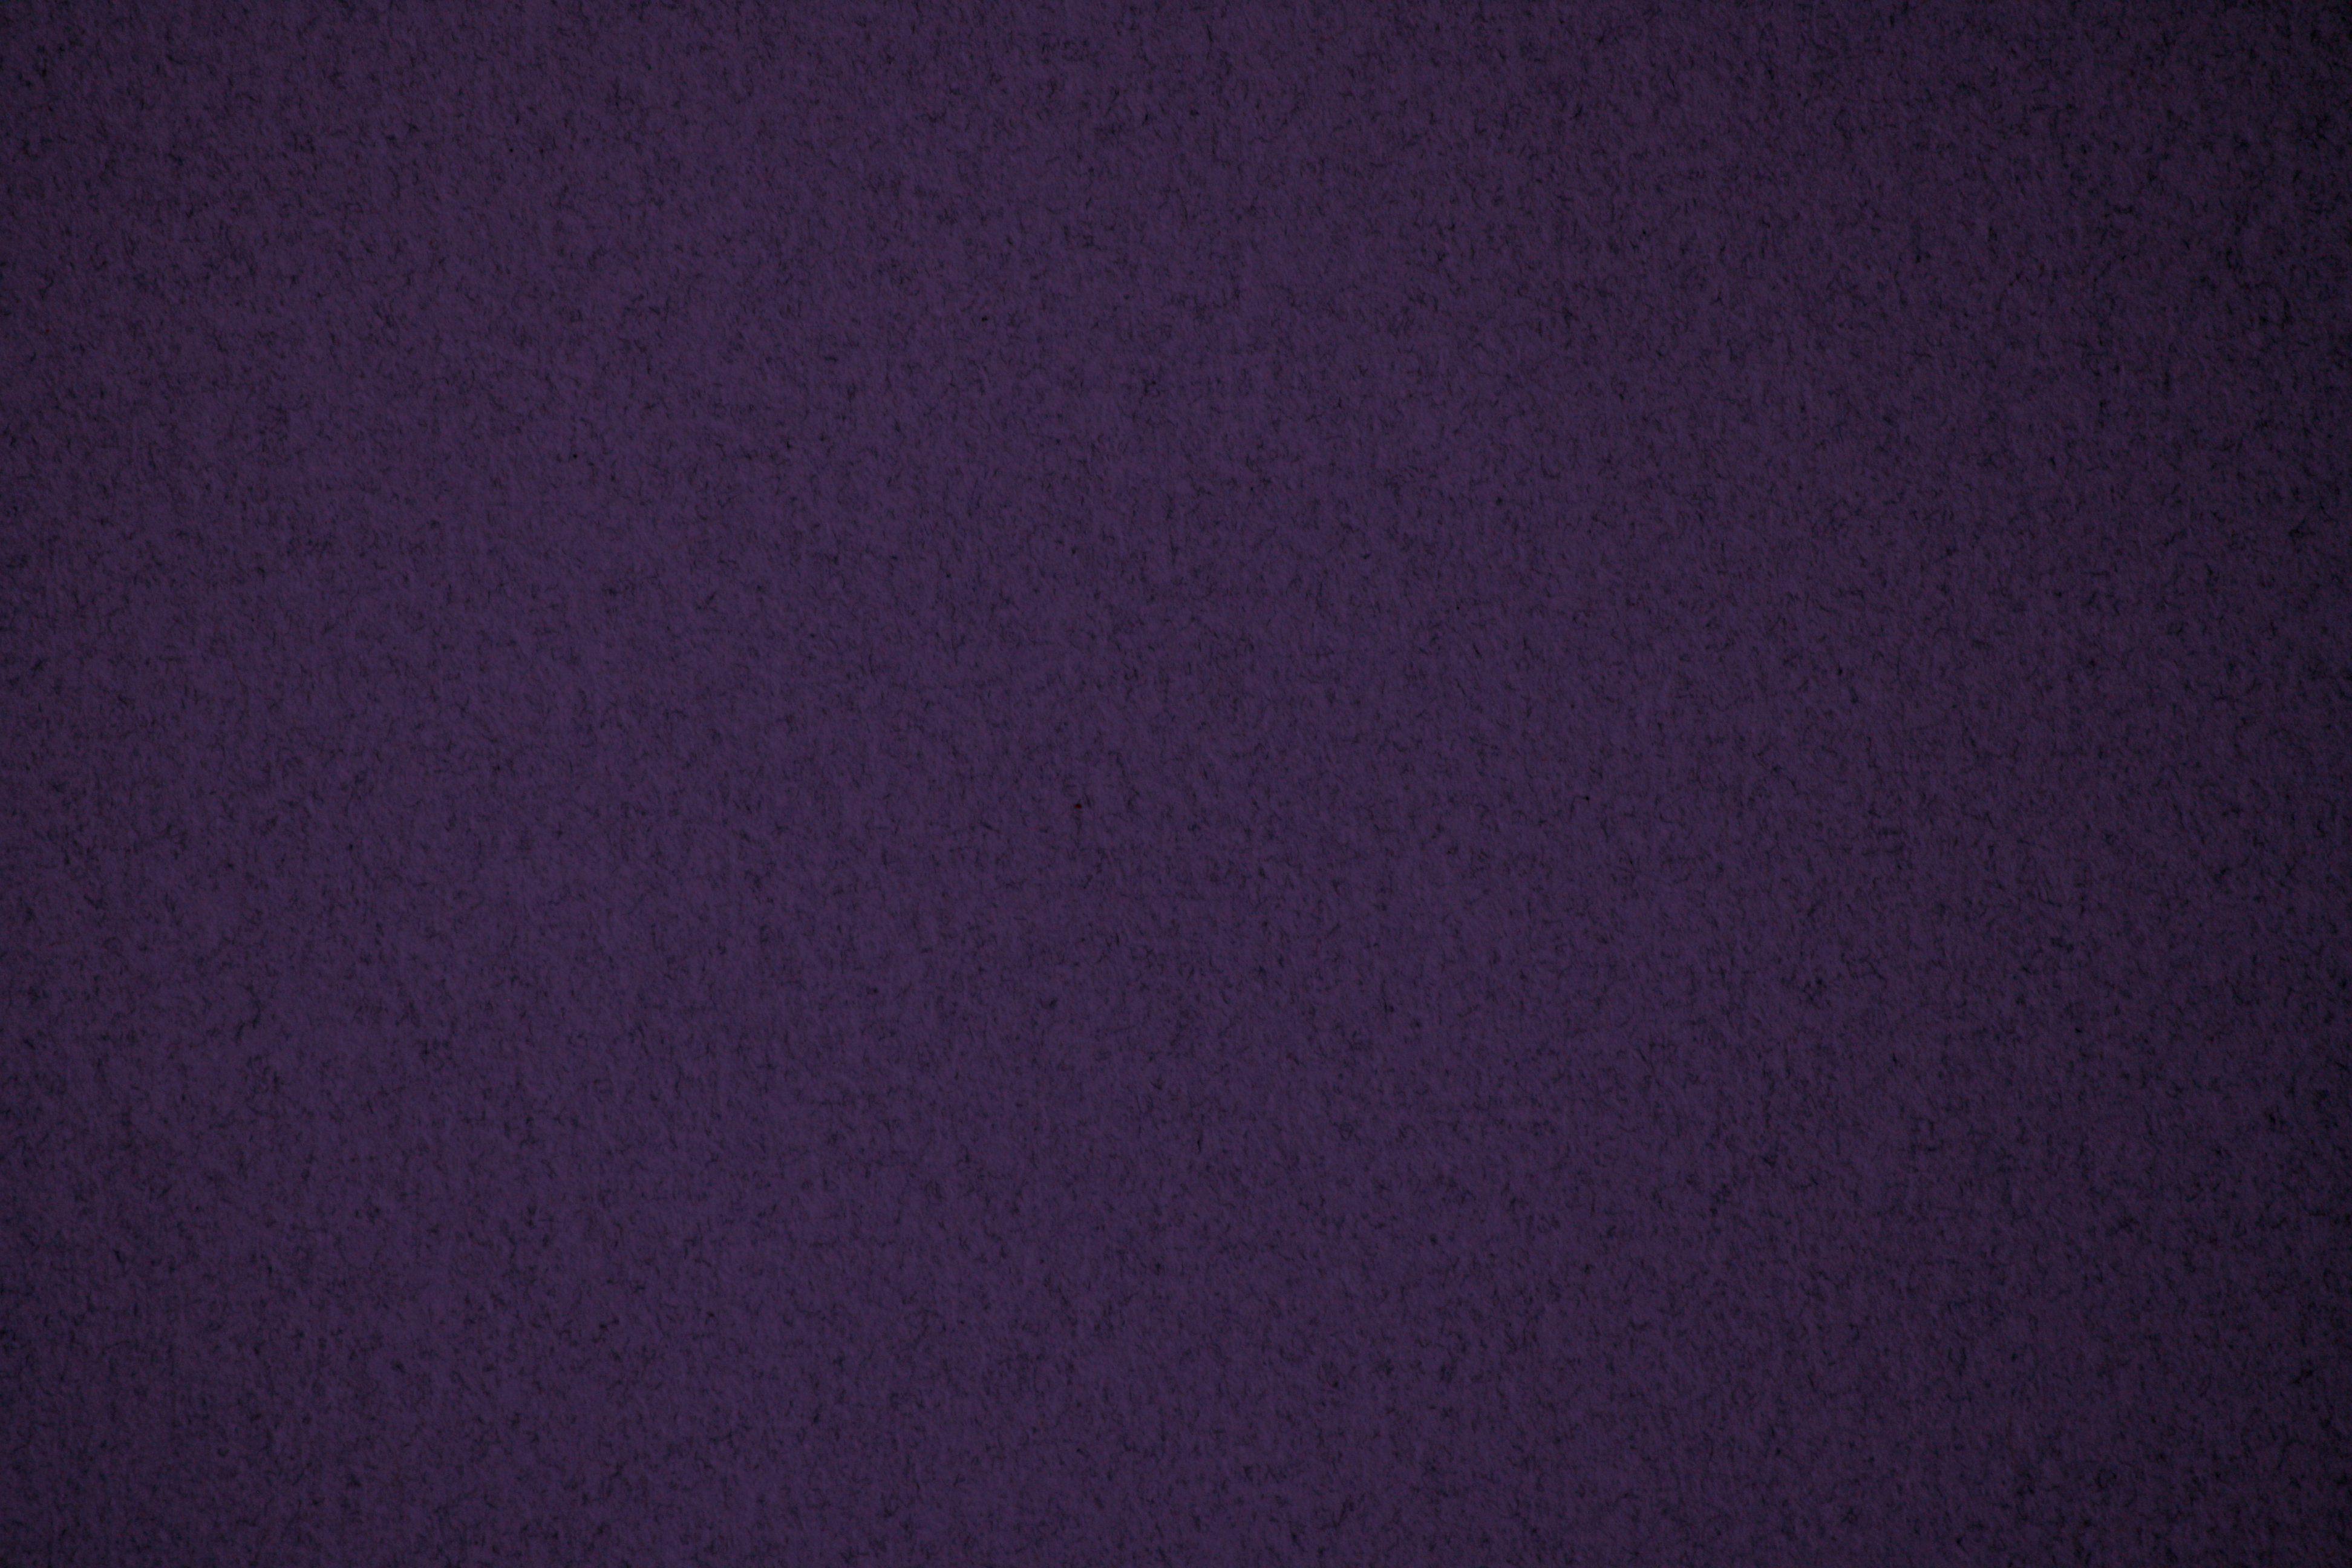 solid purple wallpaper 2021 live wallpaper hd on plain purple background